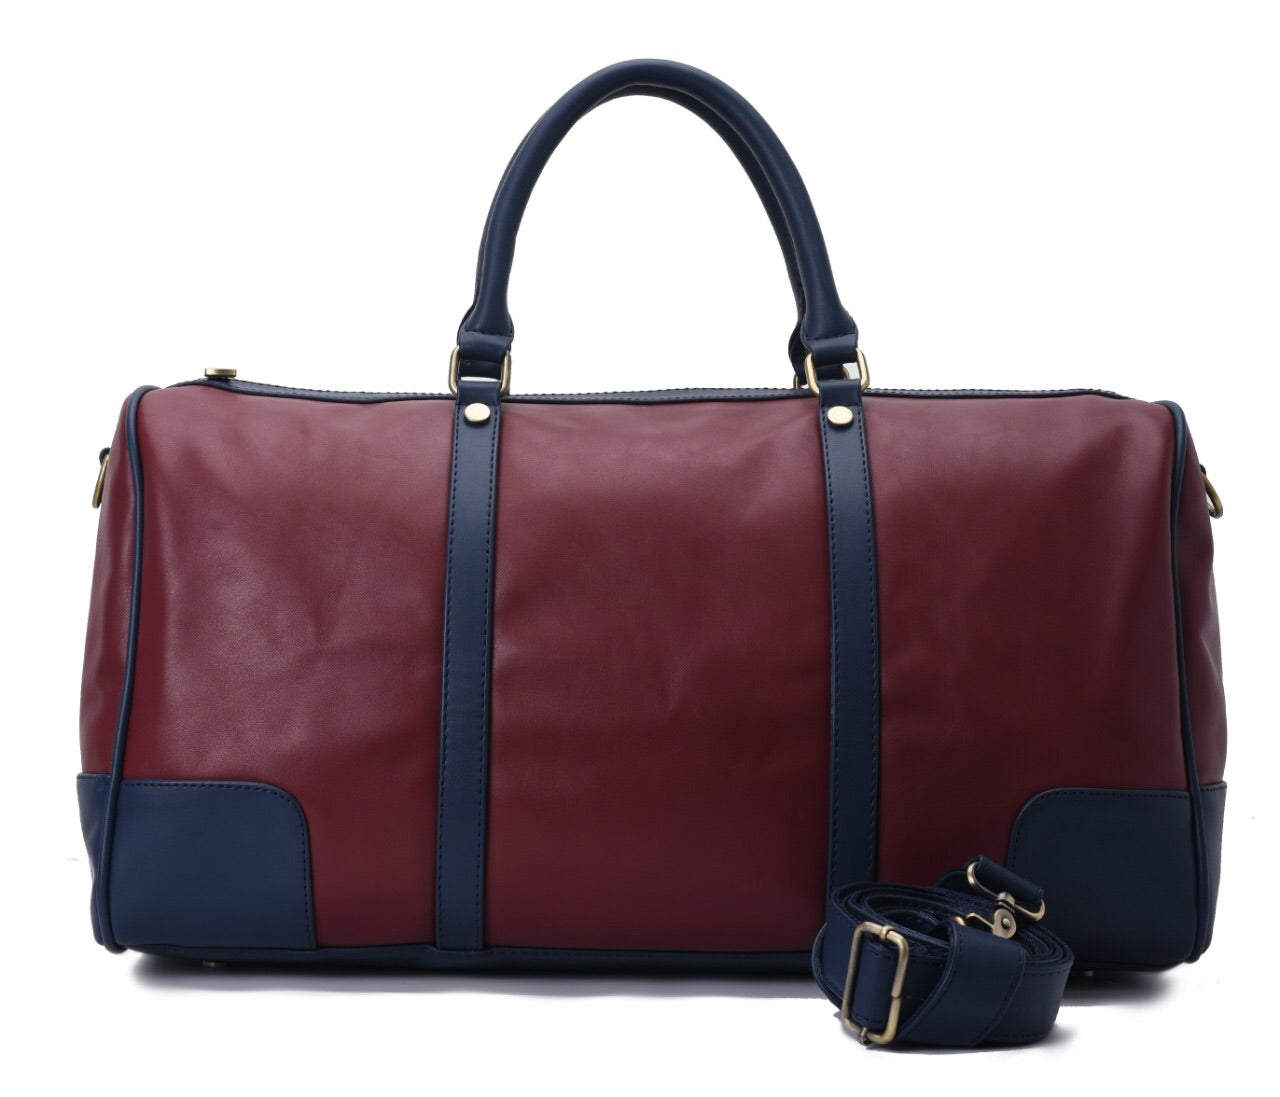 Duffle Bag Leather Burgundy & Navy